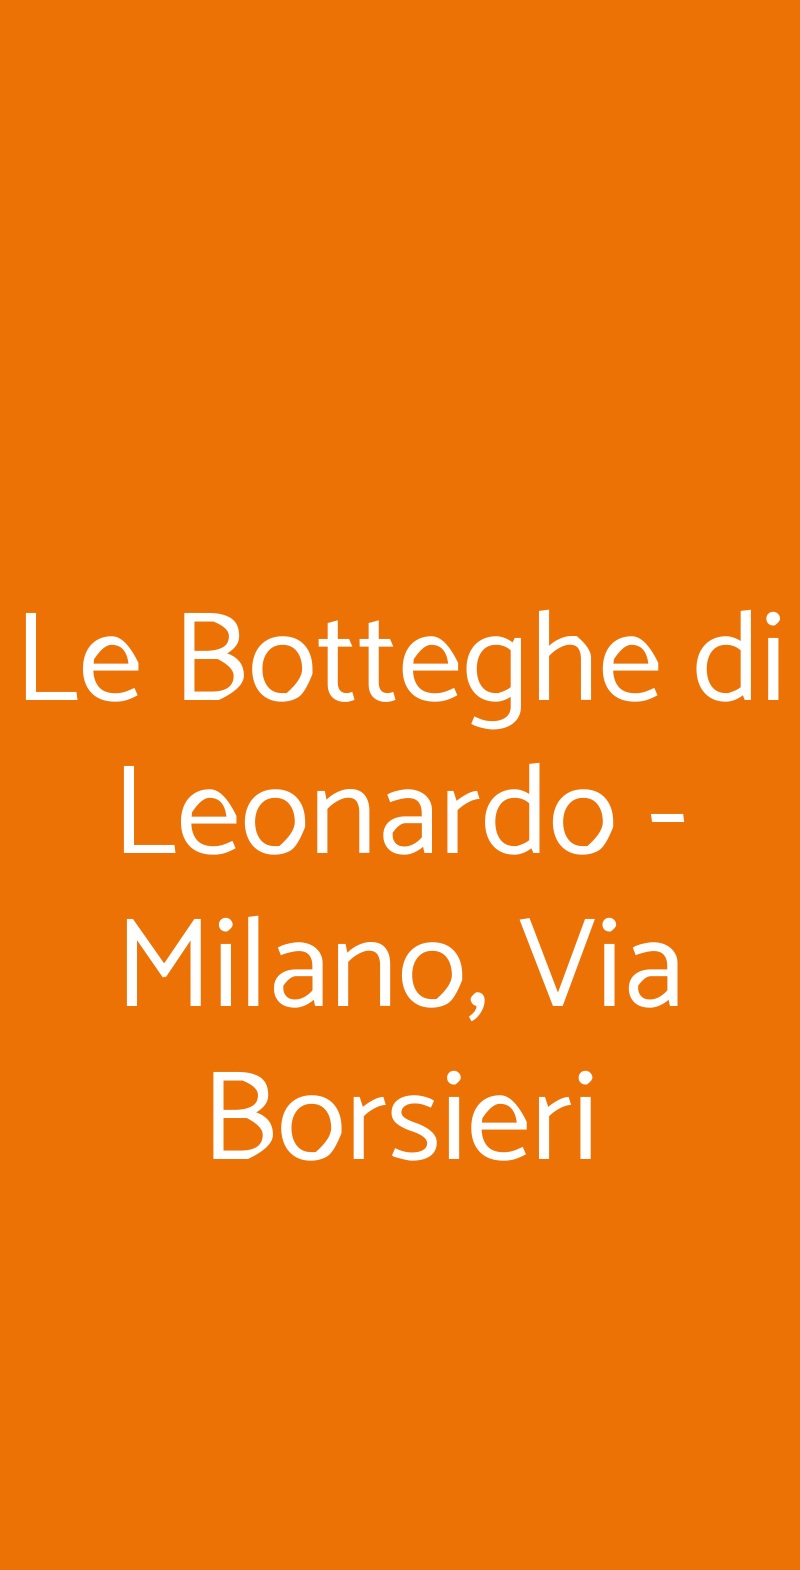 Le Botteghe di Leonardo - Milano, Via Borsieri Milano menù 1 pagina